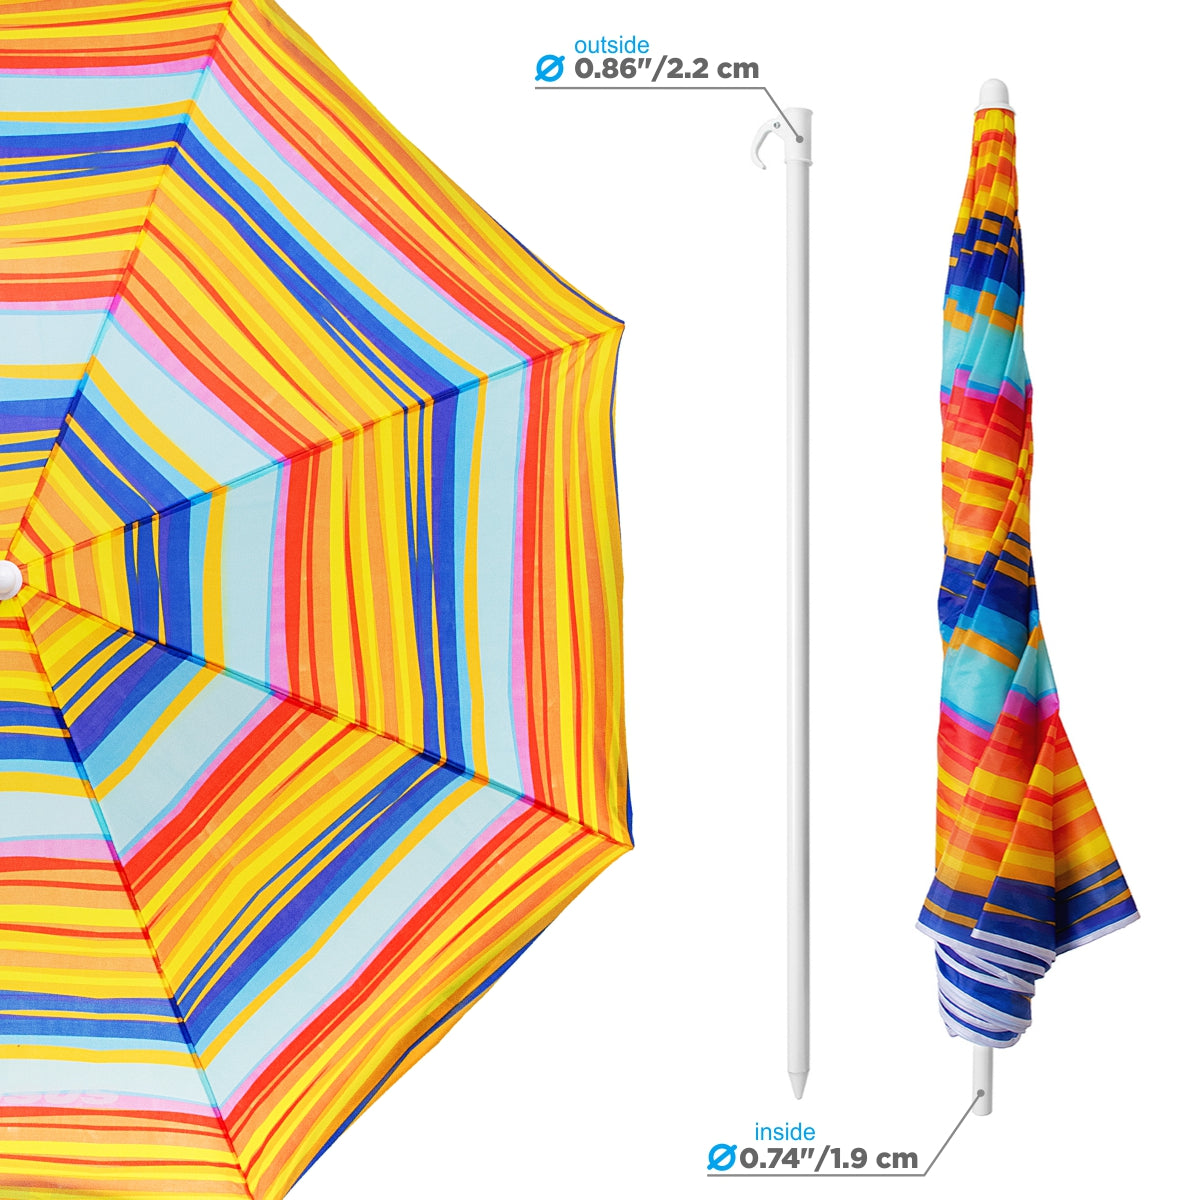 Bright Nisus Folding Beach Umbrella with a steel pole